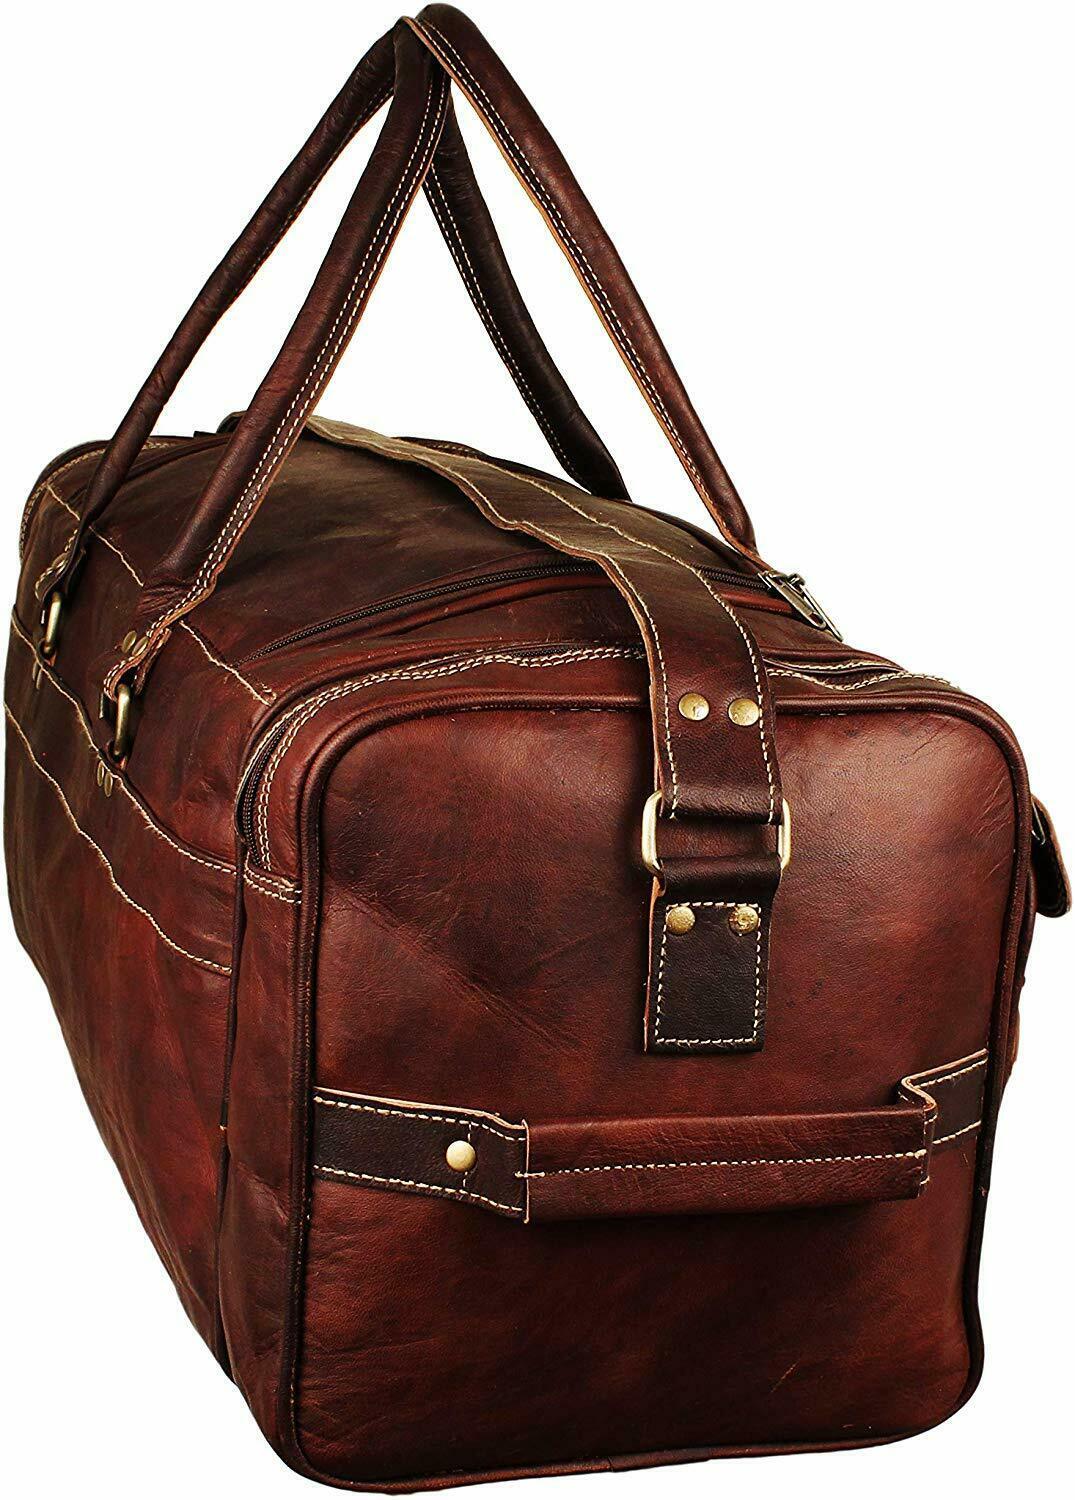 Duffel Bag Weekender Bag for Men Travel Overnight Carry on Bag Genuine Leather - Bags